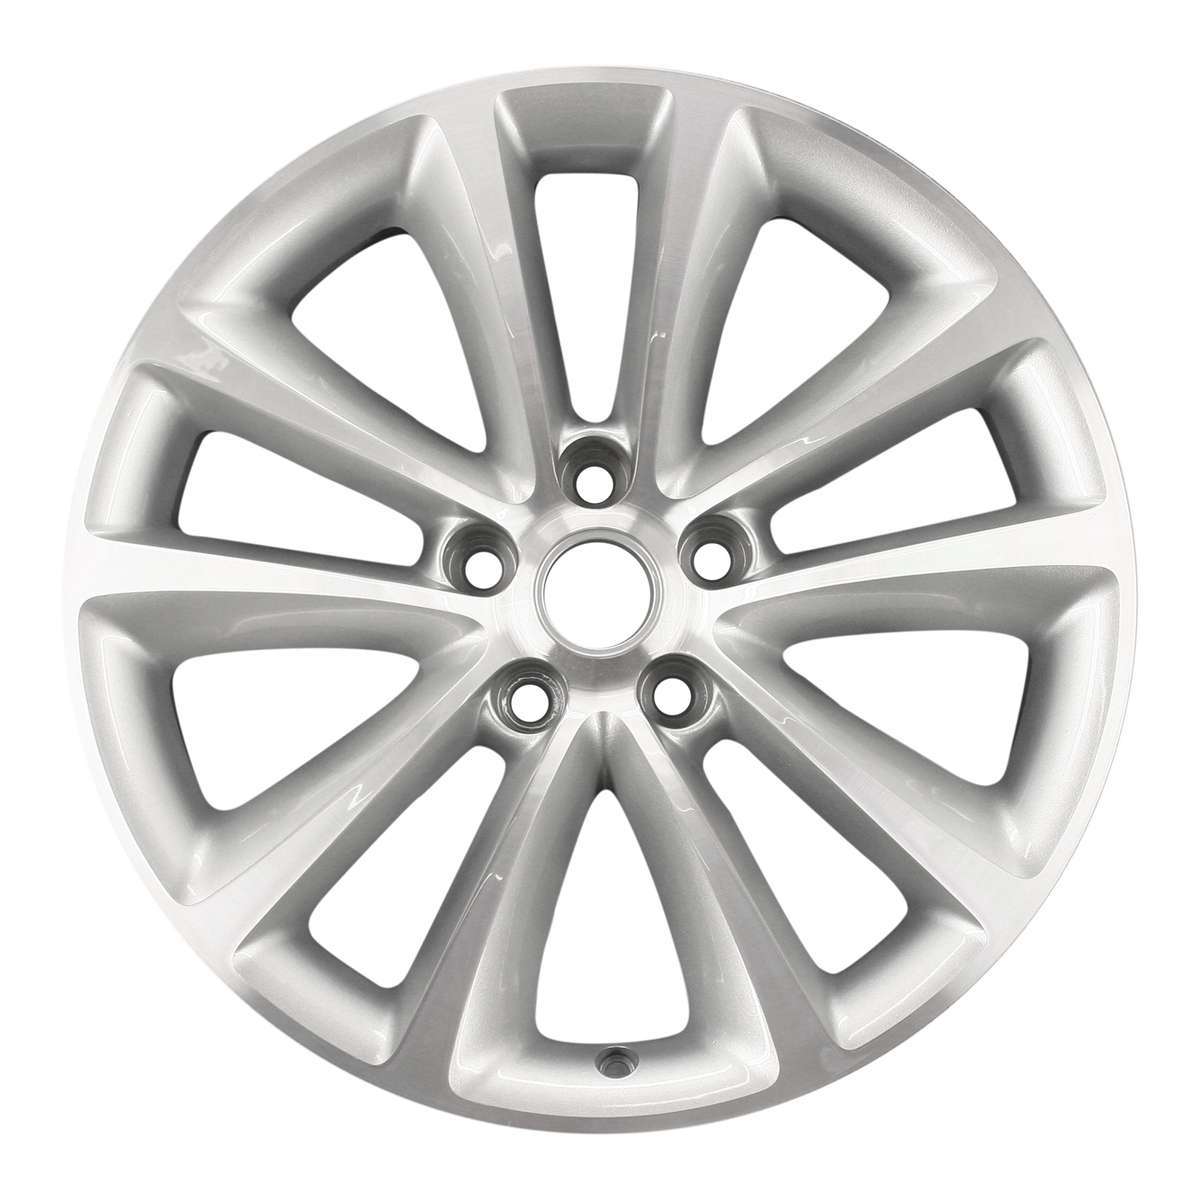 2013 Buick Verano New 18" Replacement Wheel Rim RW4111MS